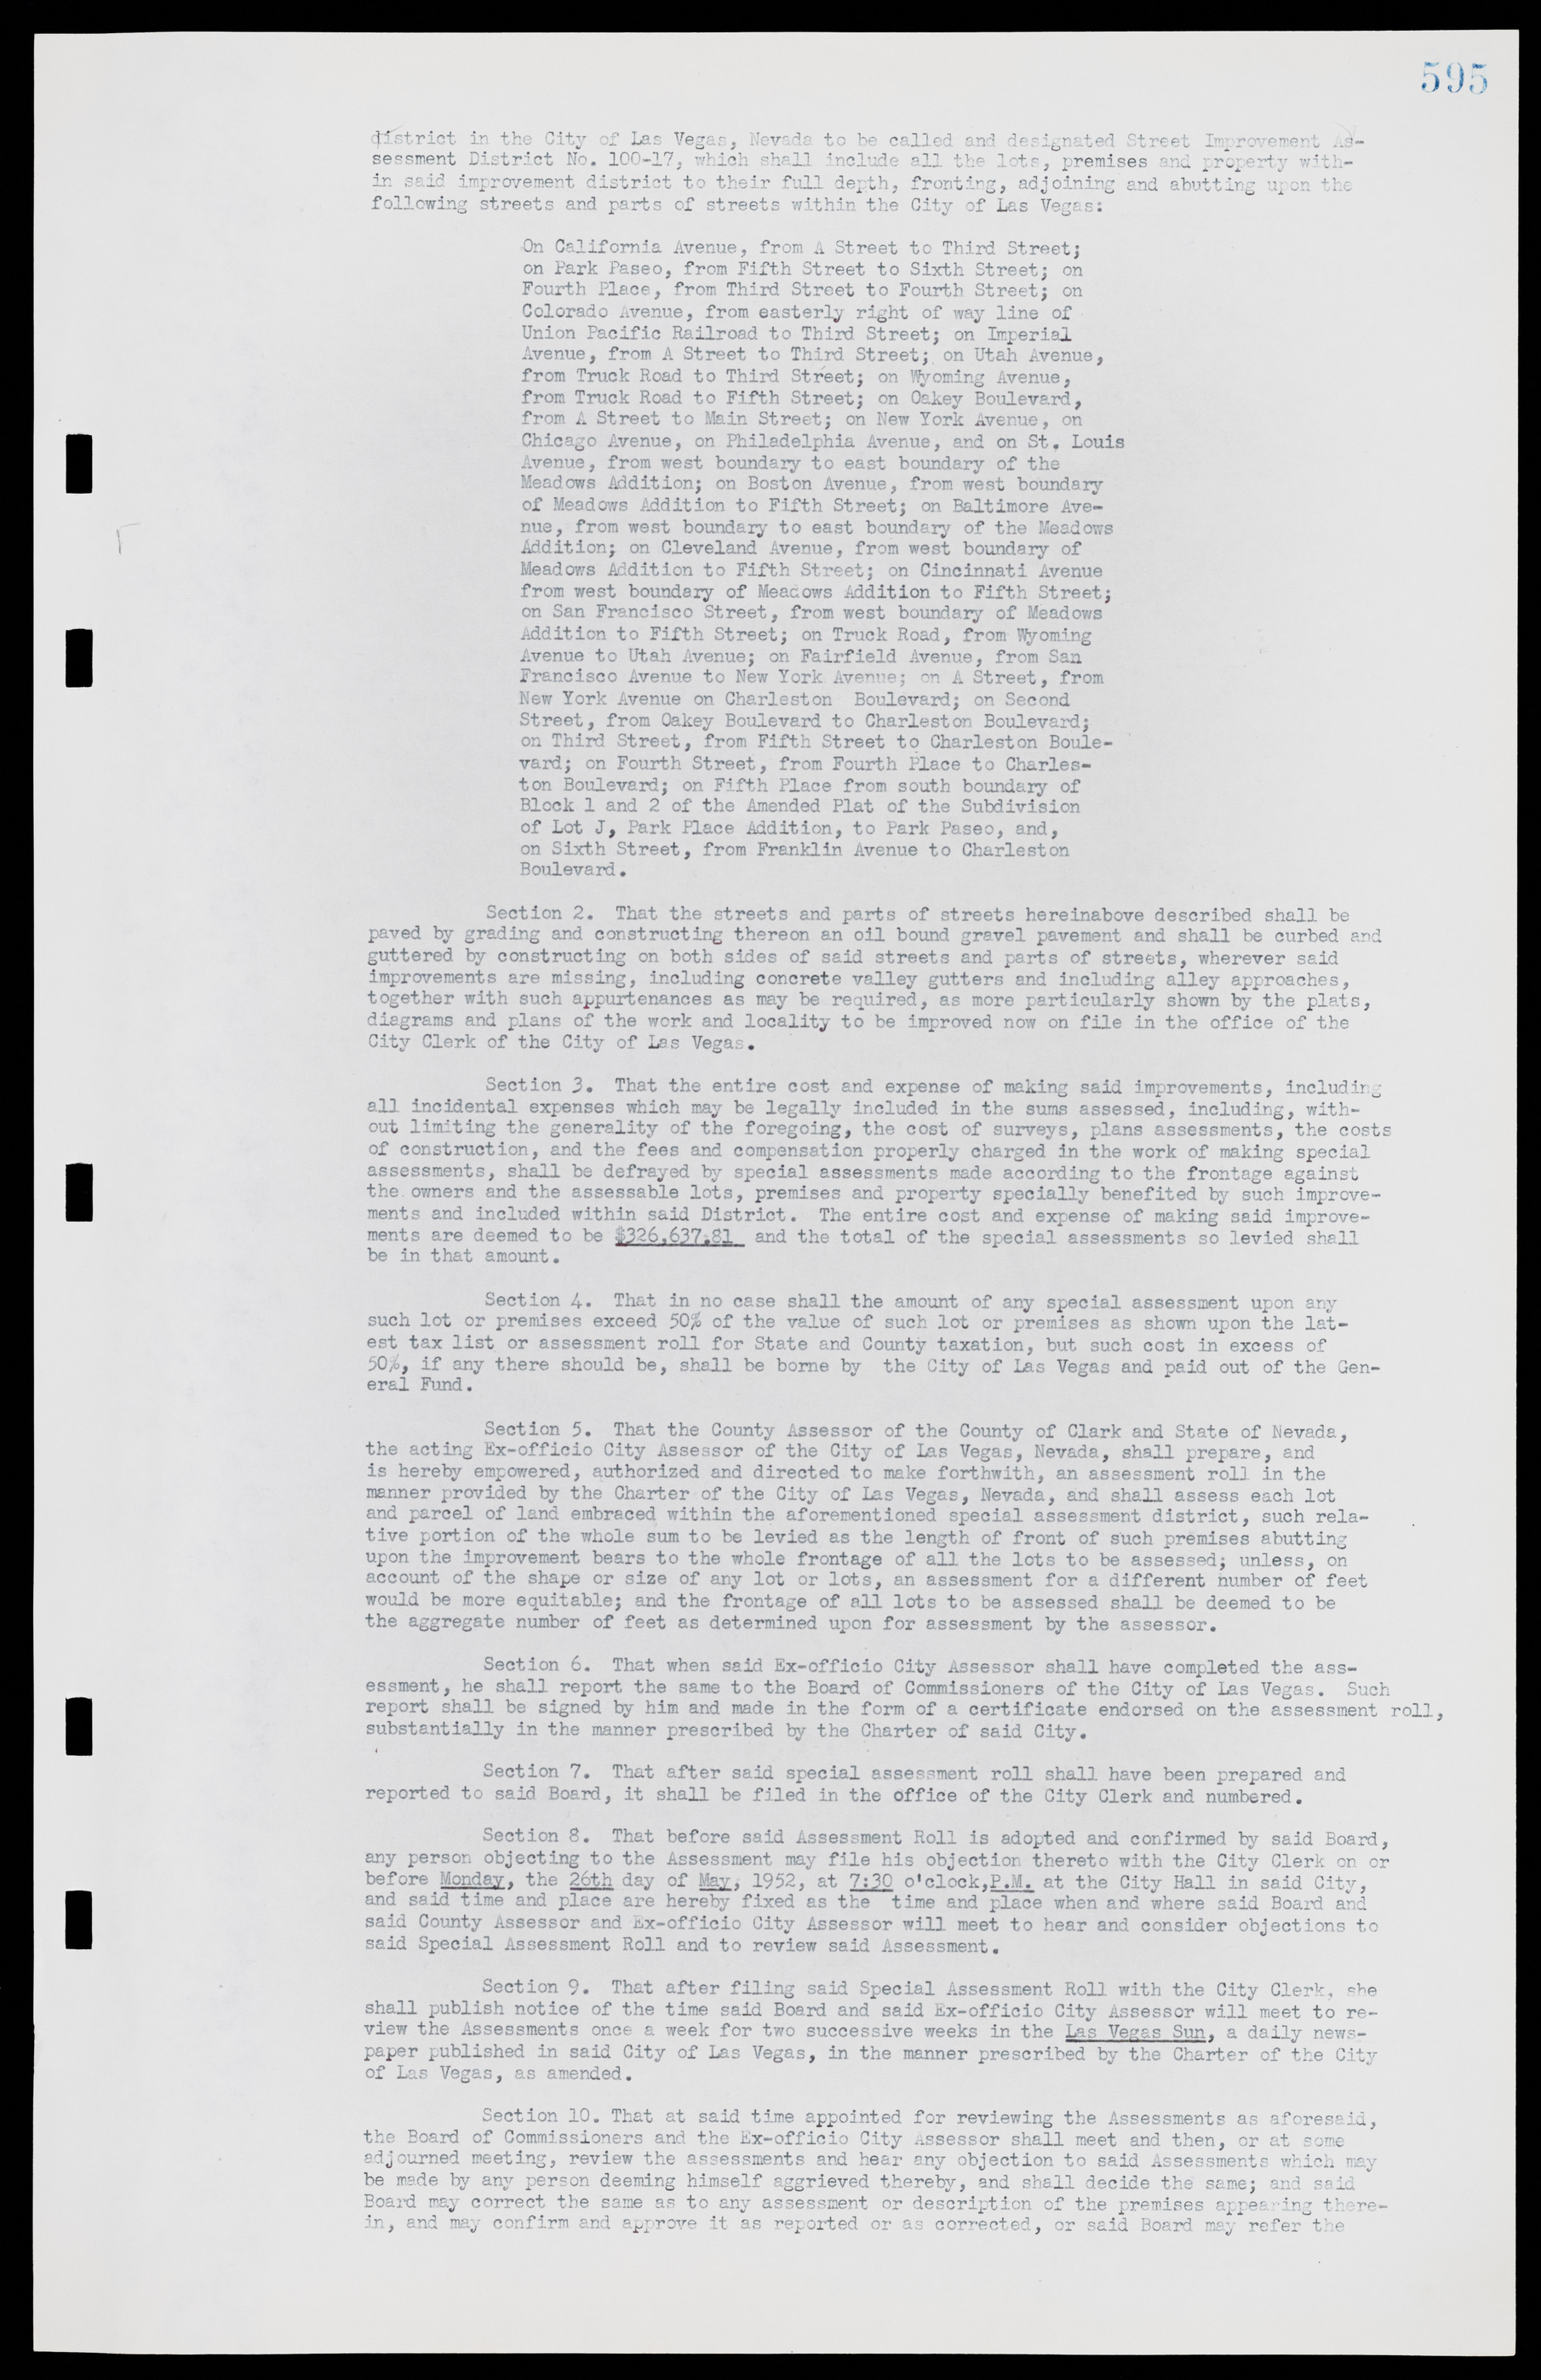 Las Vegas City Commission Minutes, November 7, 1949 to May 21, 1952, lvc000007-613